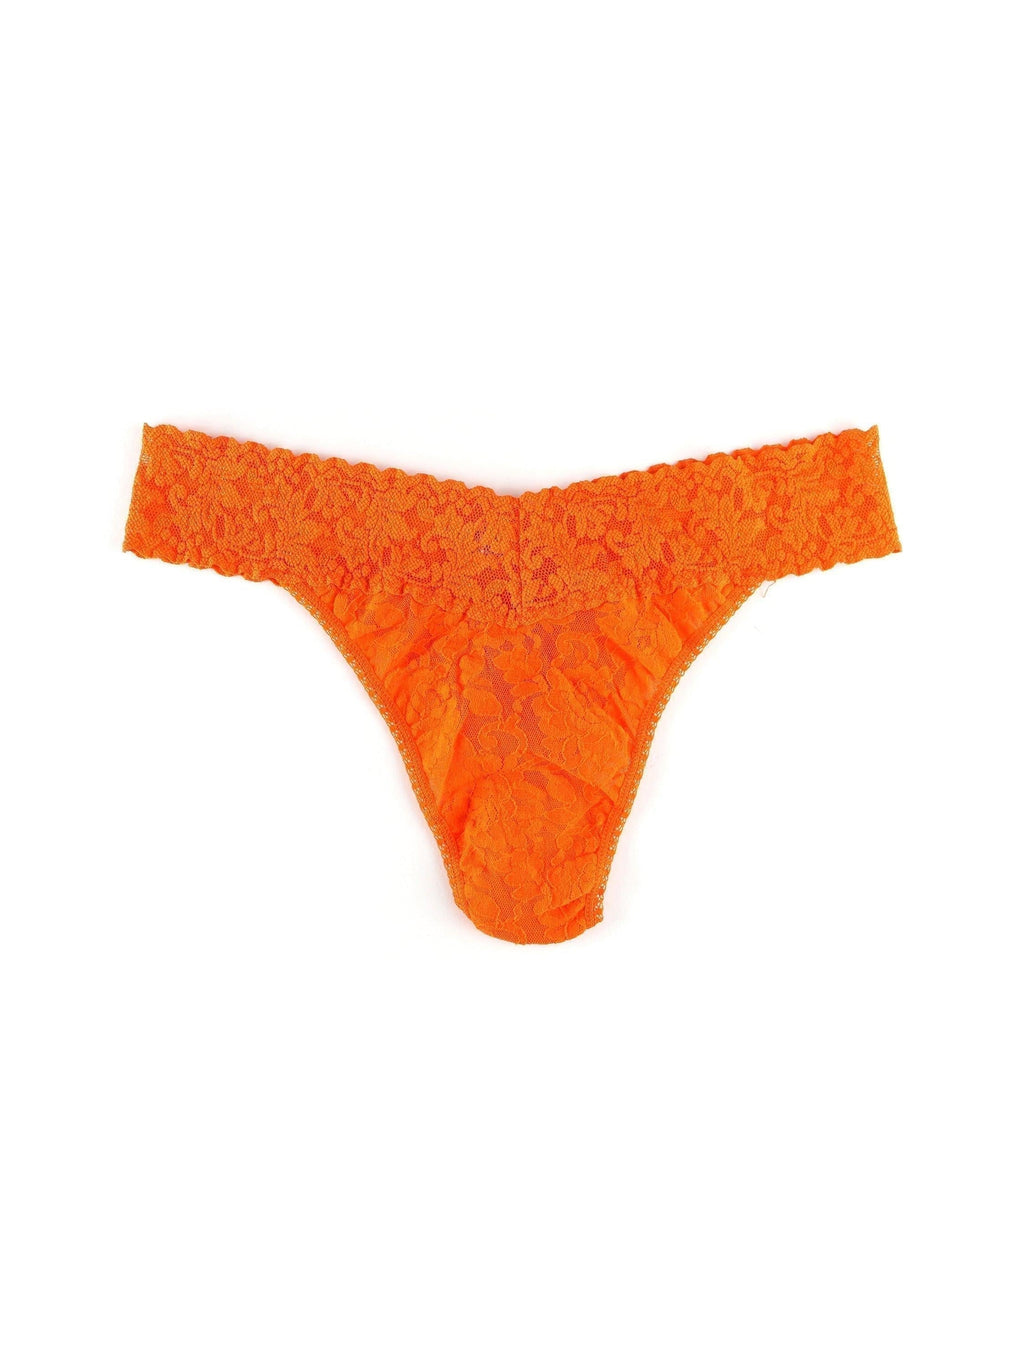 Signature Lace Original Rise Thong Satsuma Orange | Hanky Panky